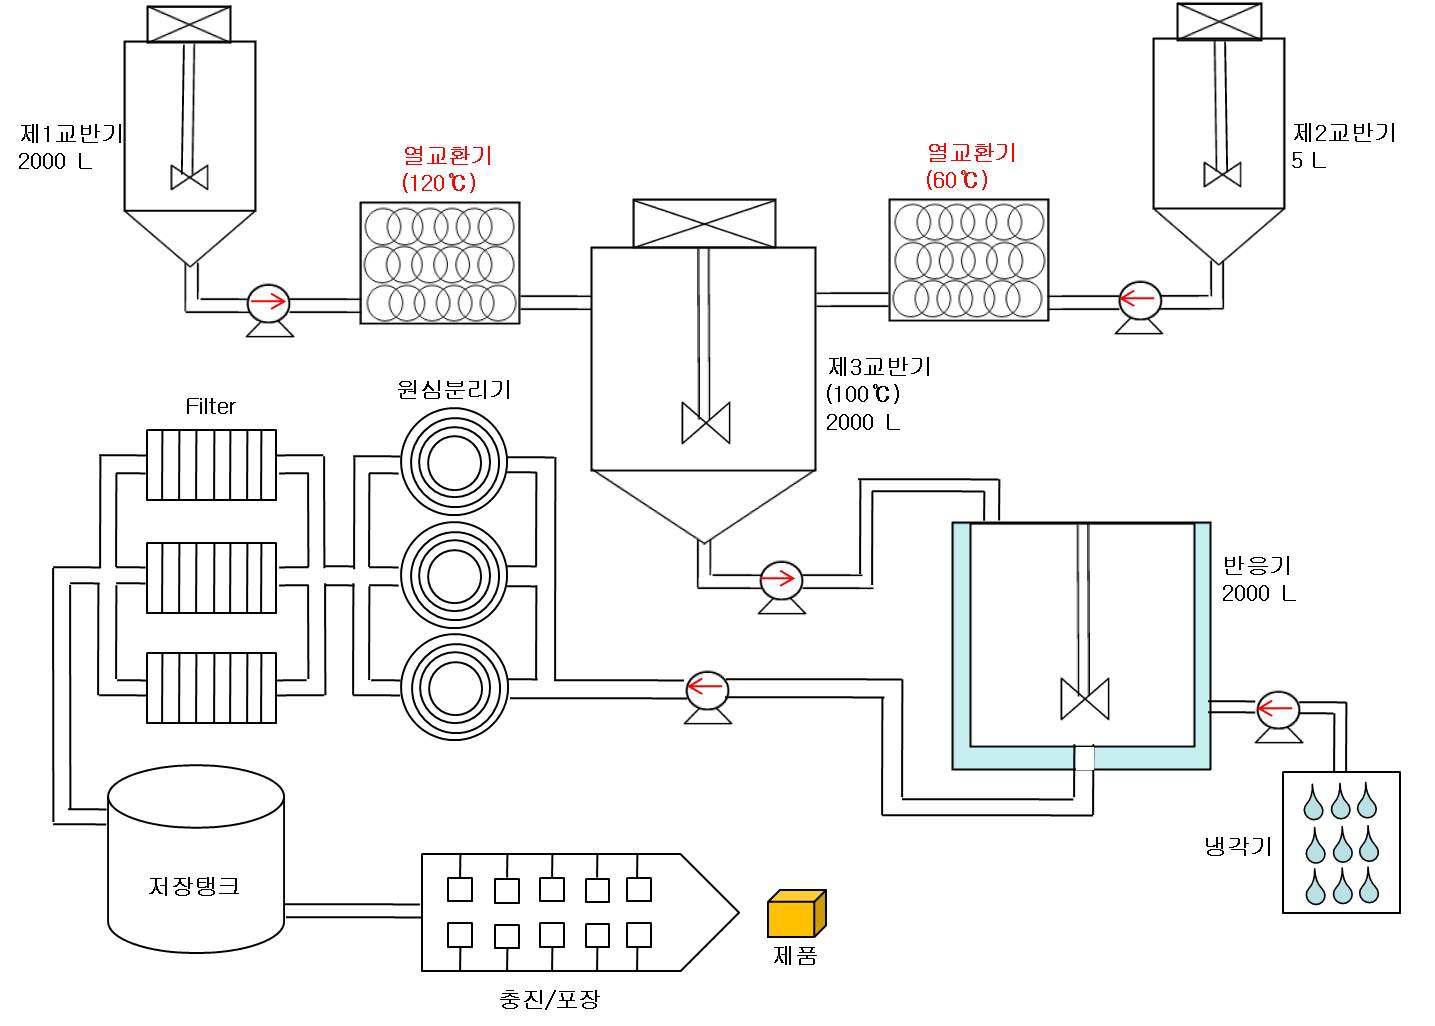 Flow sheet of mass production process